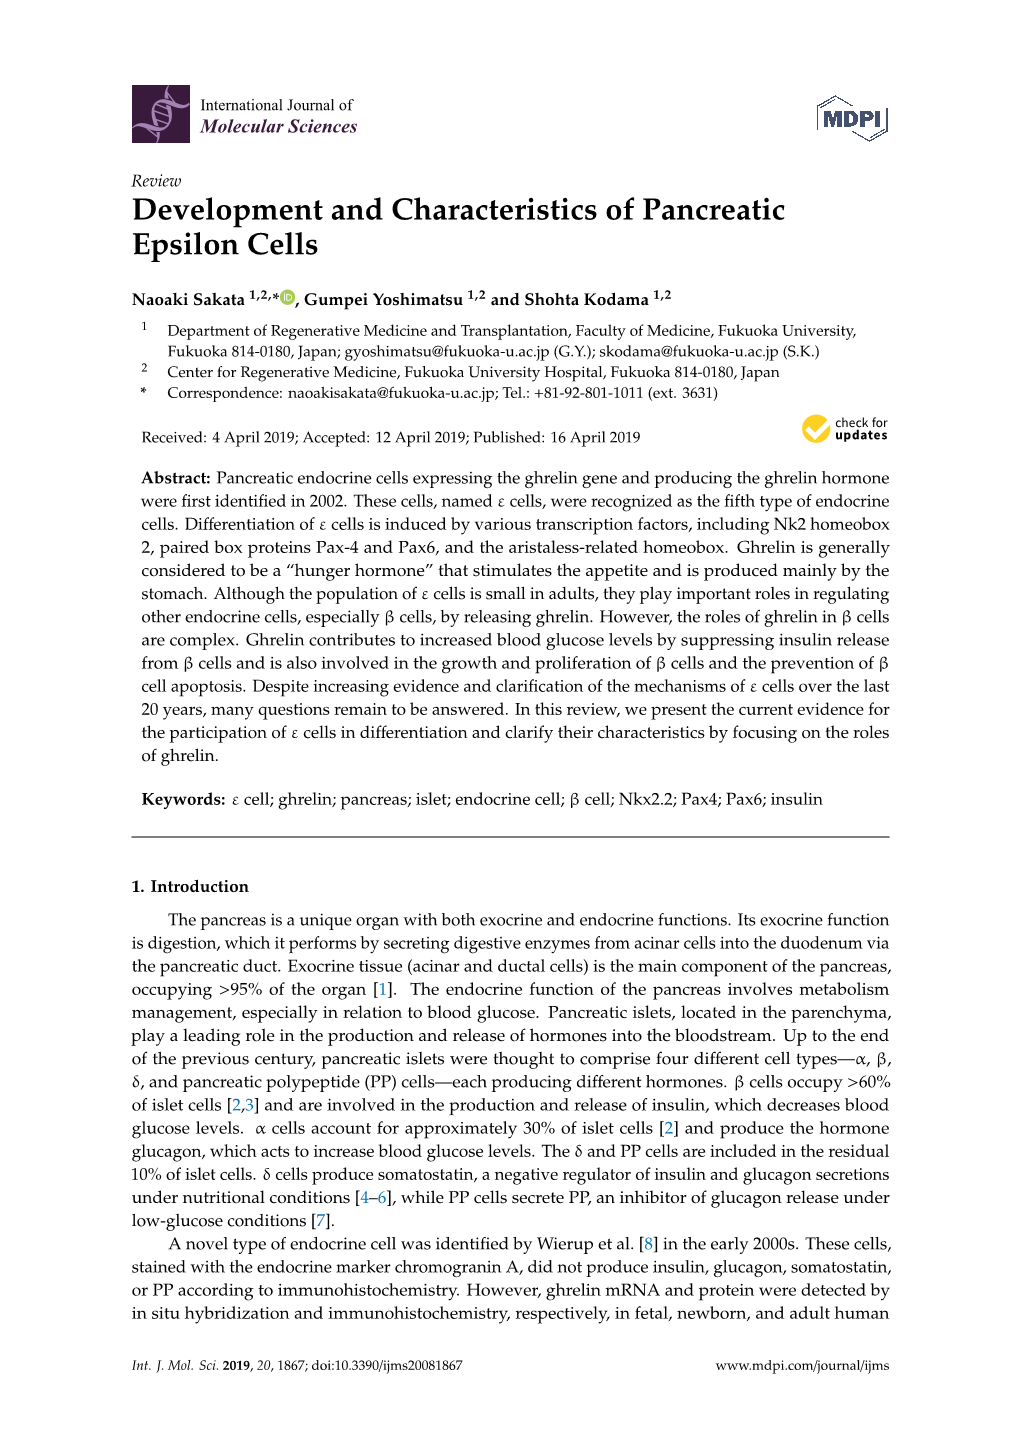 Development and Characteristics of Pancreatic Epsilon Cells